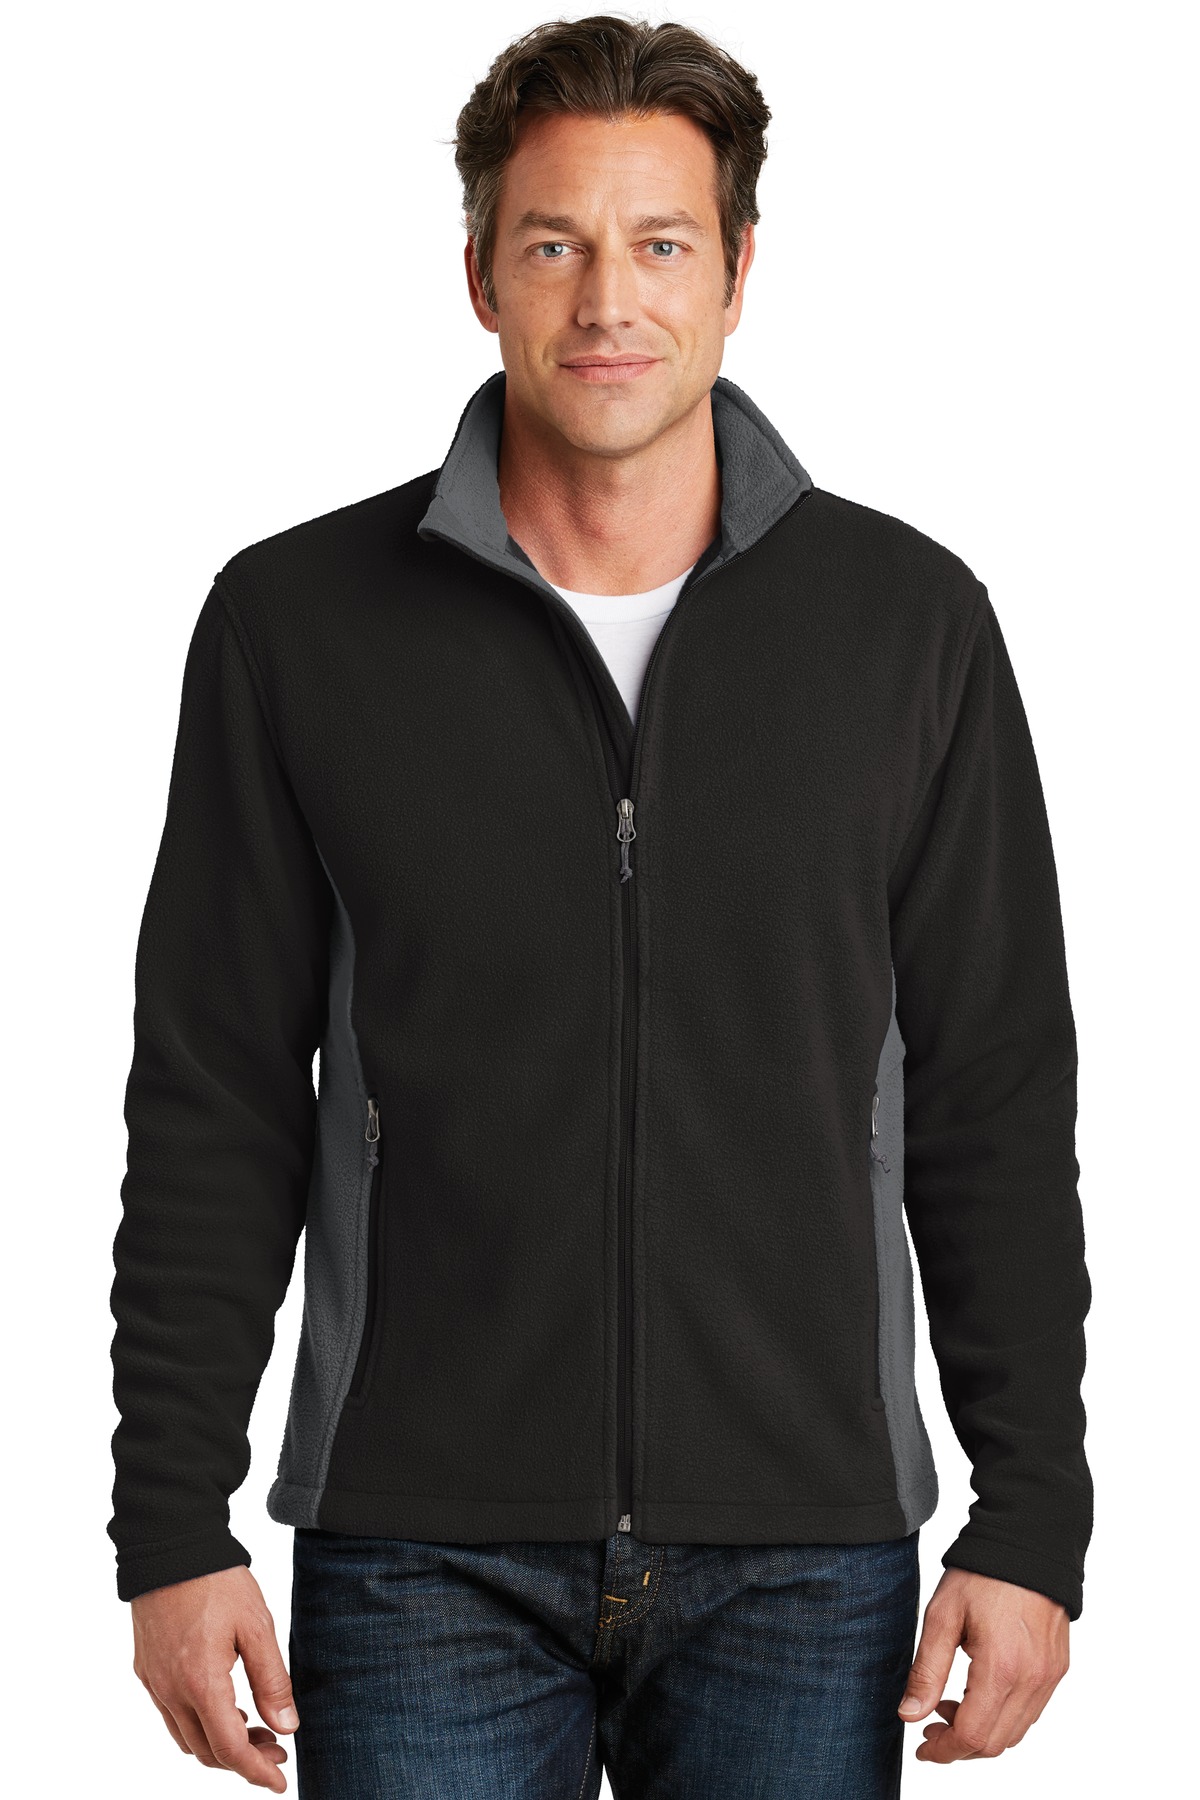 Port Authority Corporate Hospitality Sweatshirts&Fleece ® Colorblock Value Fleece Jacket.-Port Authority